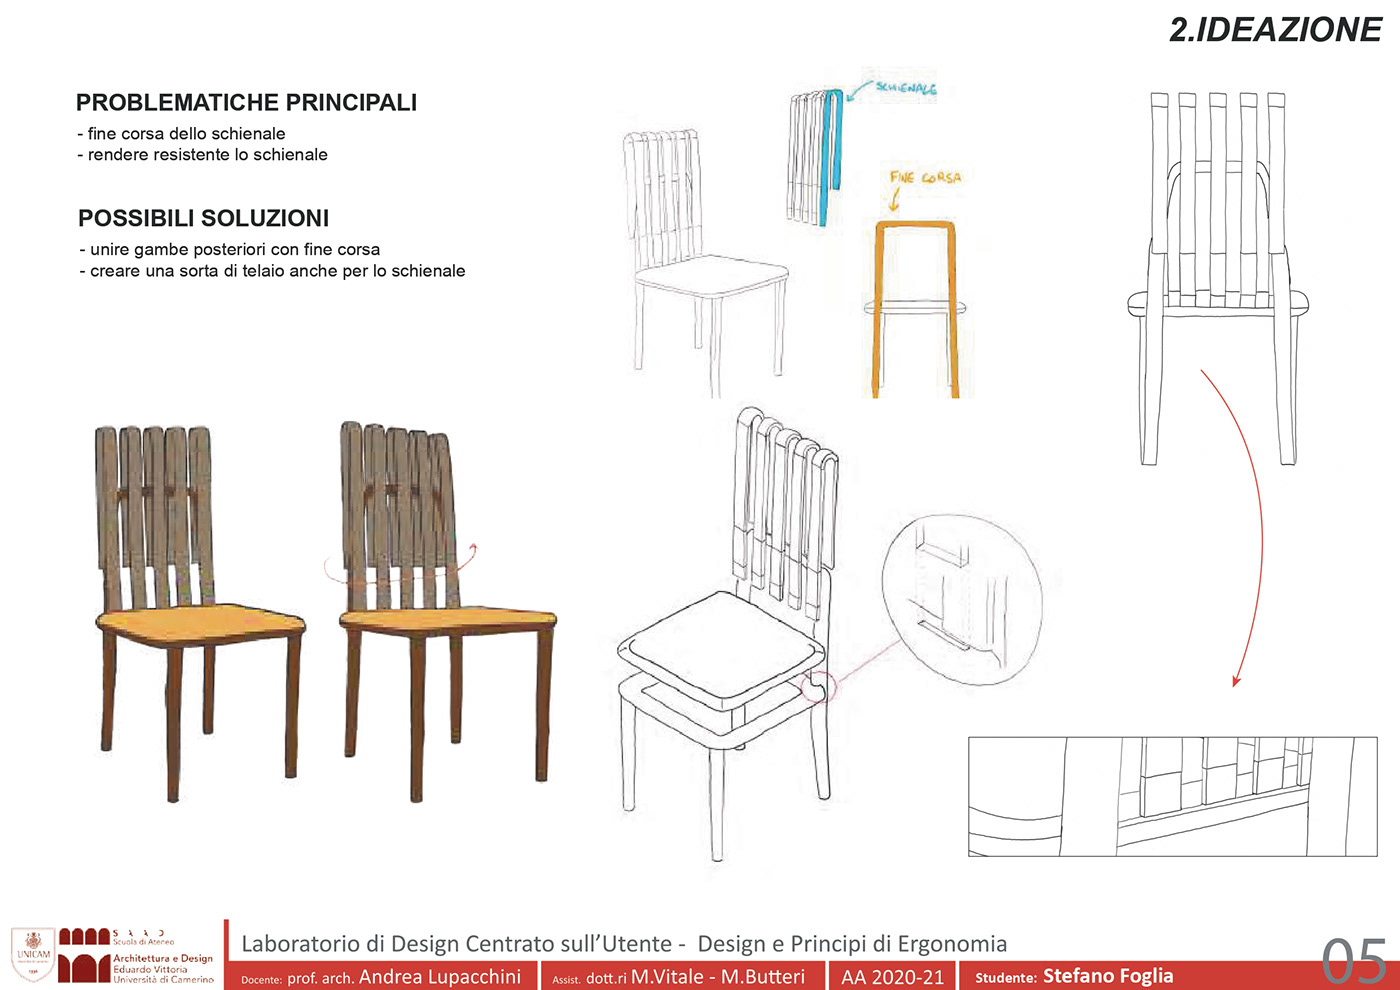 industrial design  interior design  Render chair design 3d modeling Porada prototype